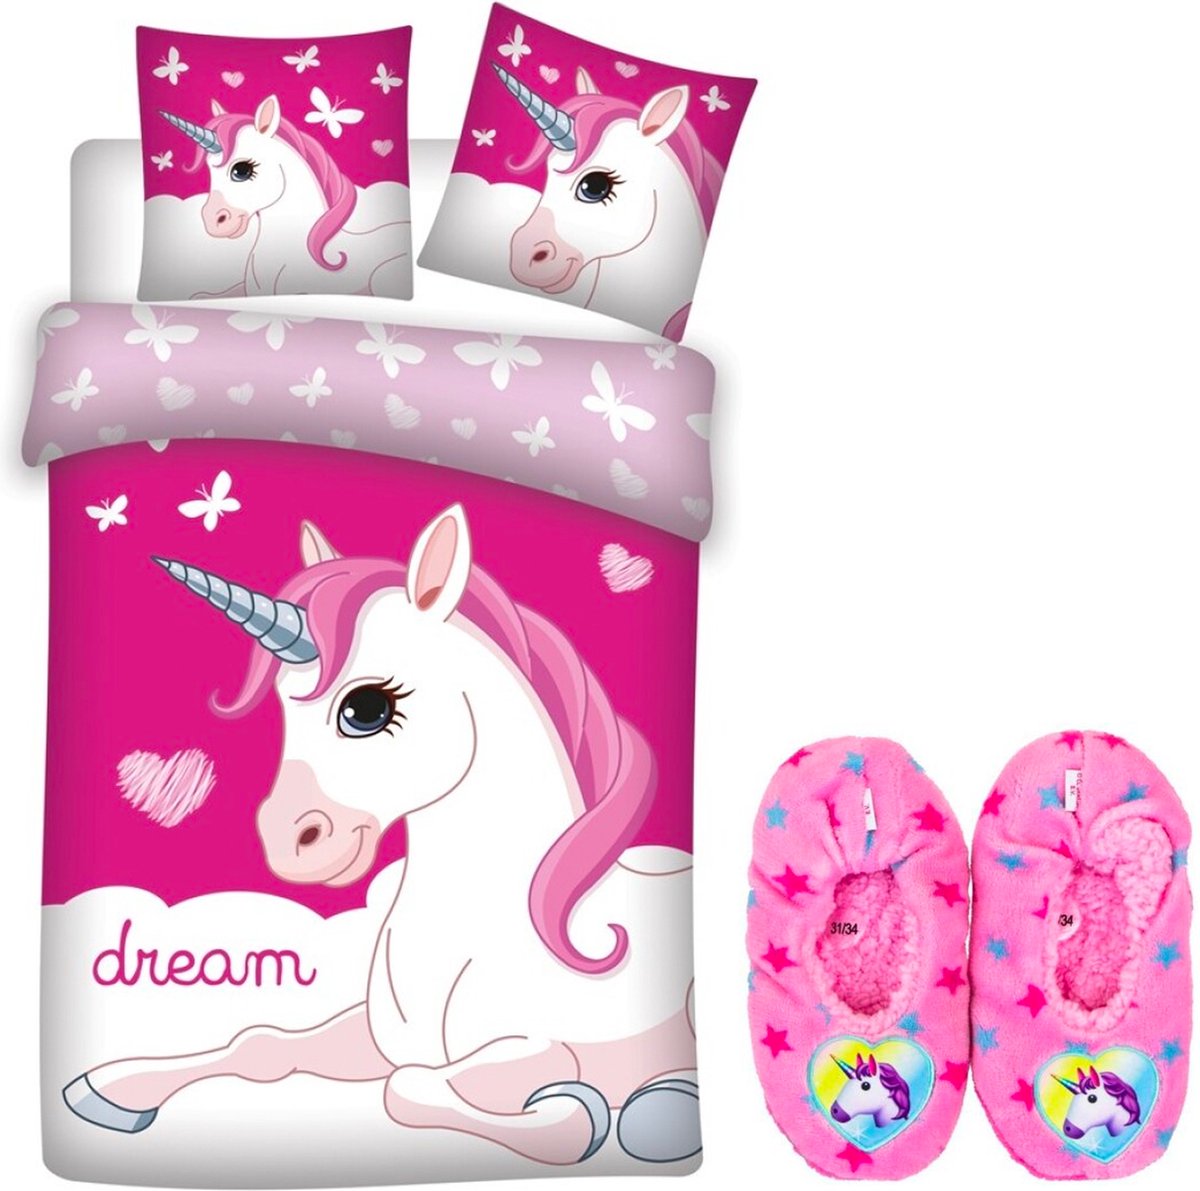 Dekbedovertrek Unicorn- roze- 1 persoons- Polyester- dekbed meisjes- 140x200 cm, incl. Unicorn-huis slofjes mt 35-38.